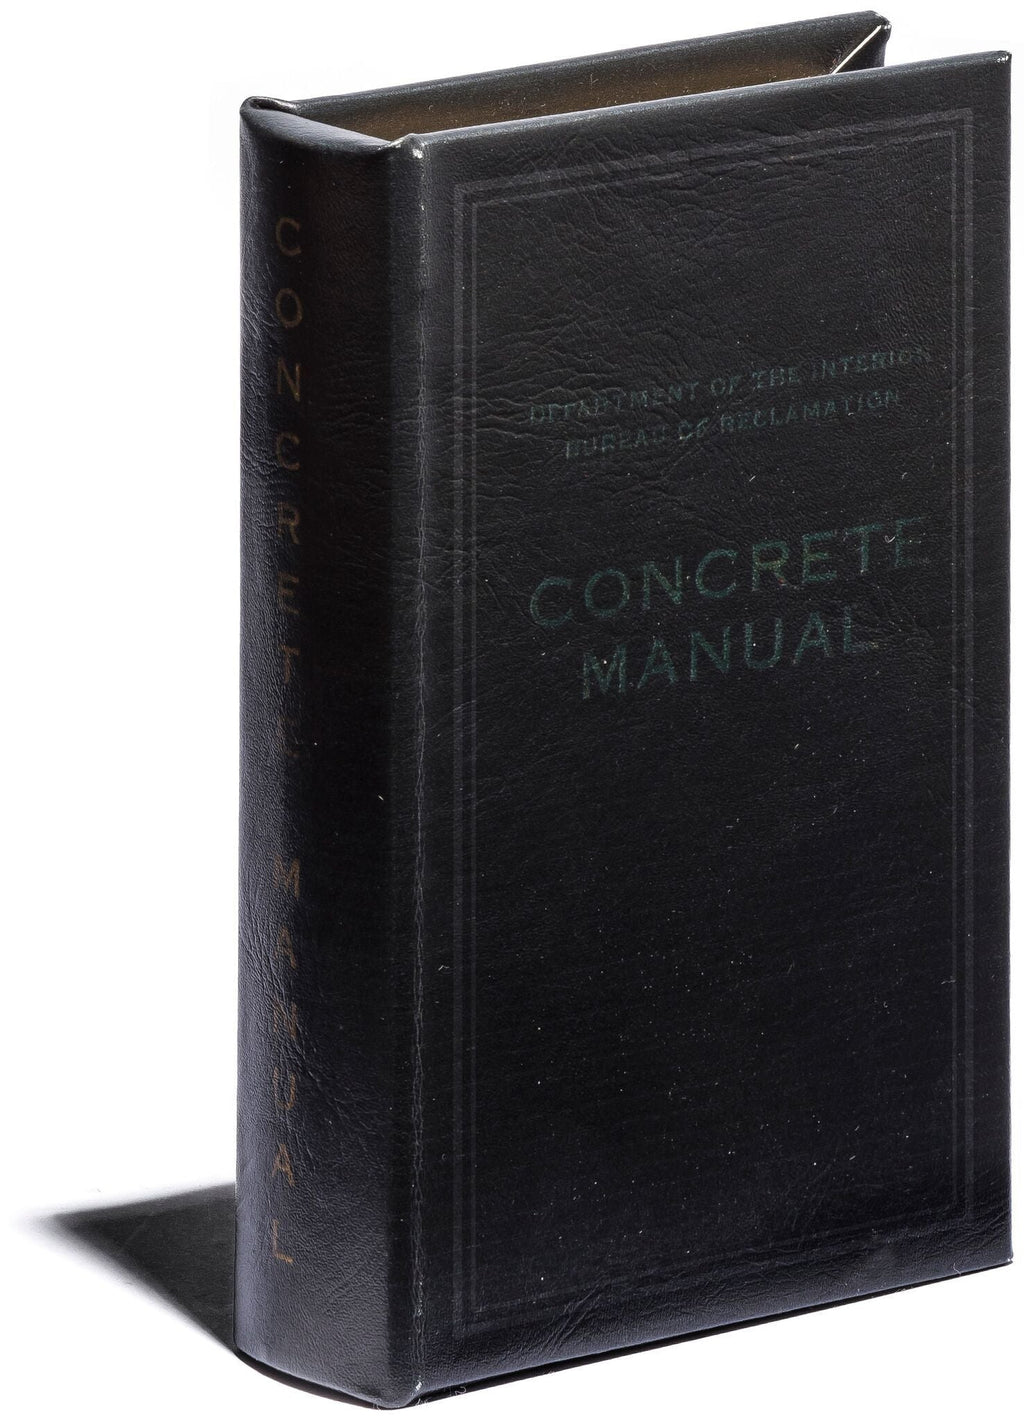 book box concrete manual bk design by puebco 1